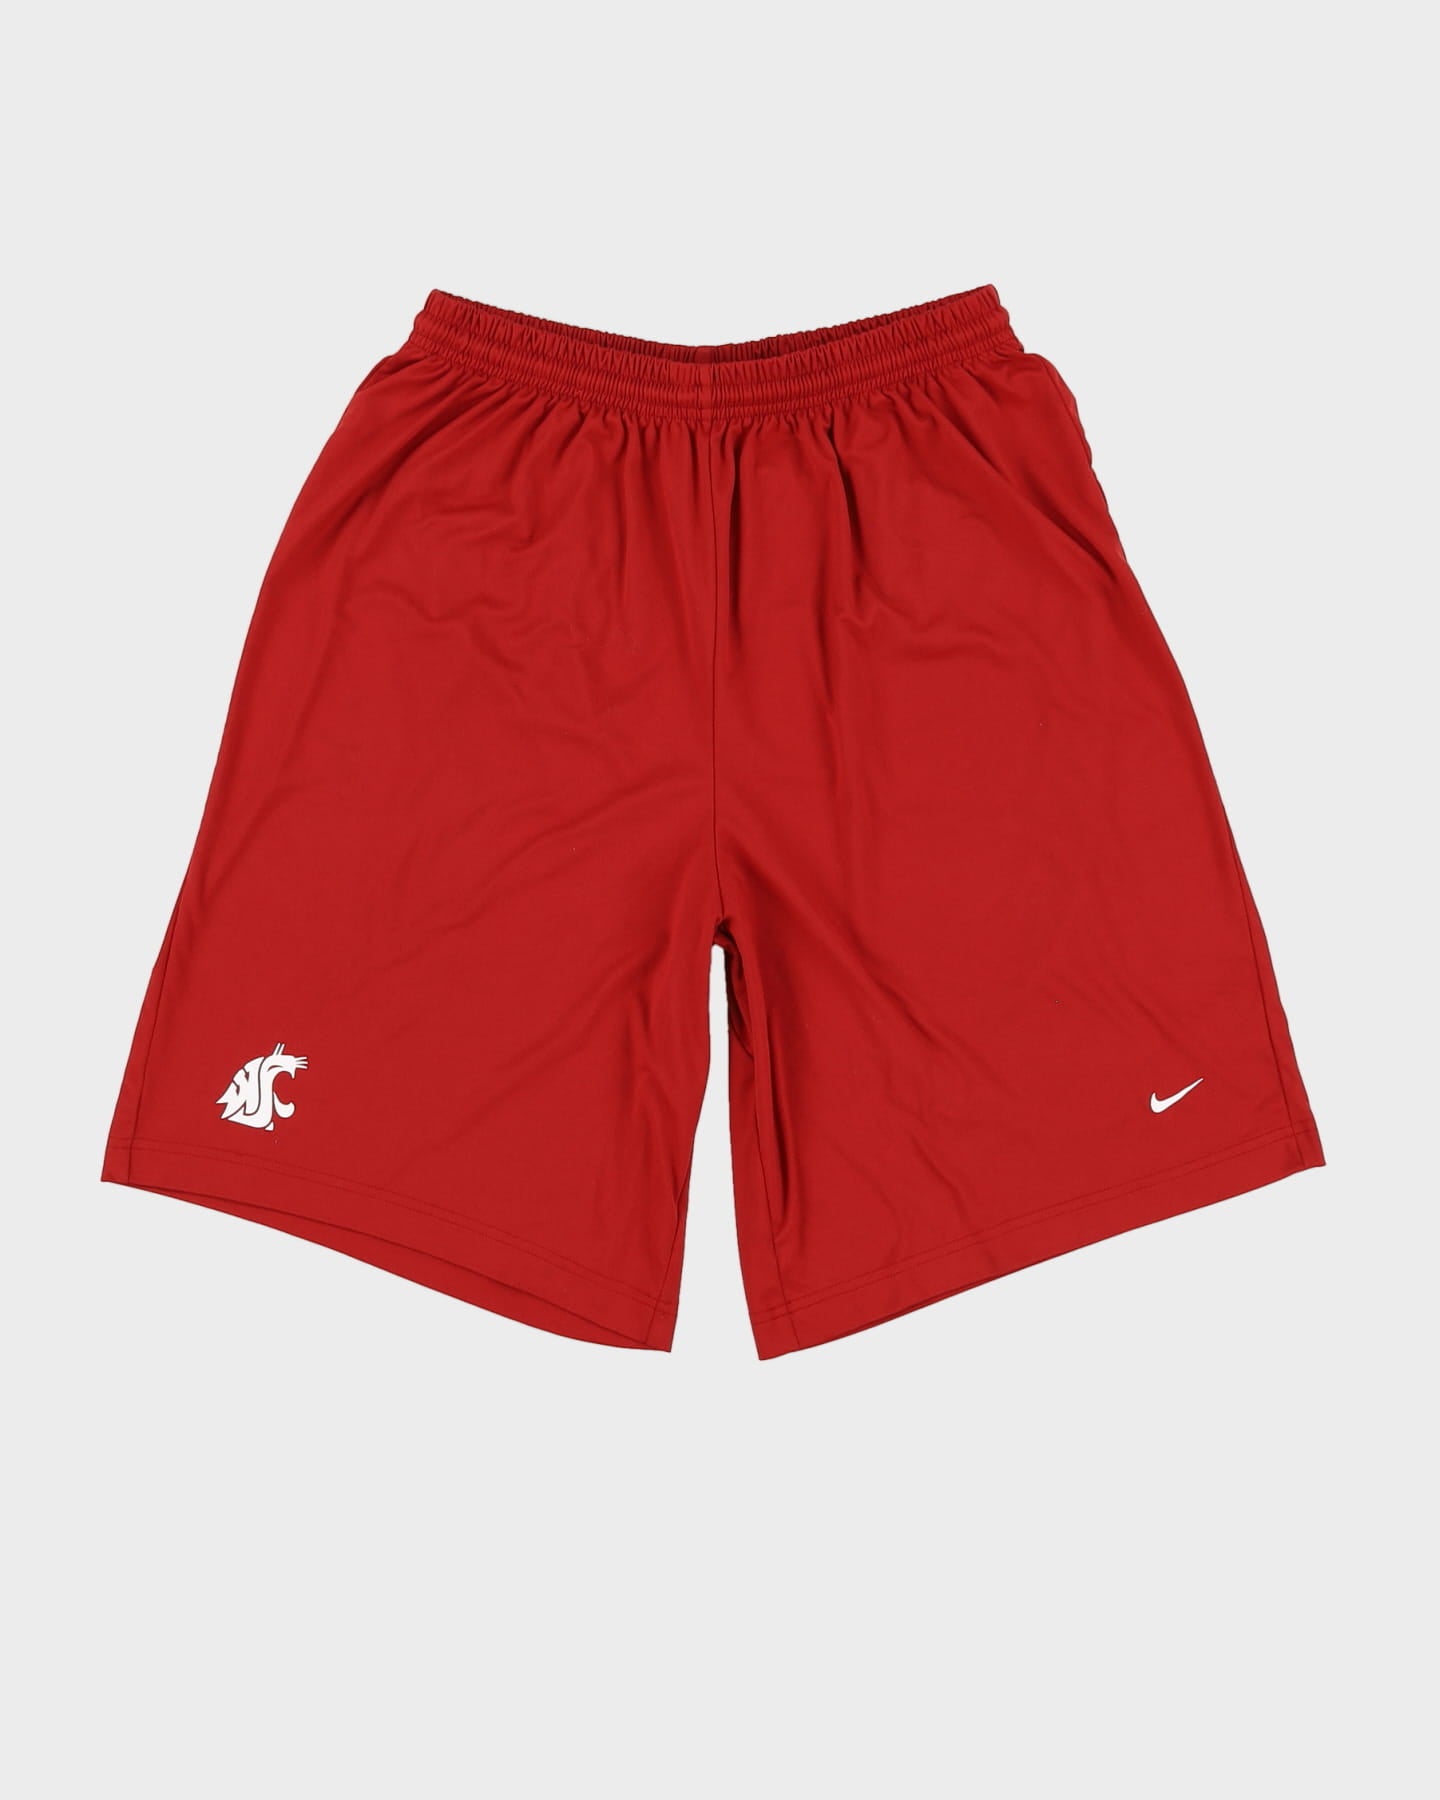 00s Nike NCAA Dark Red Sports / Gym Shorts - L